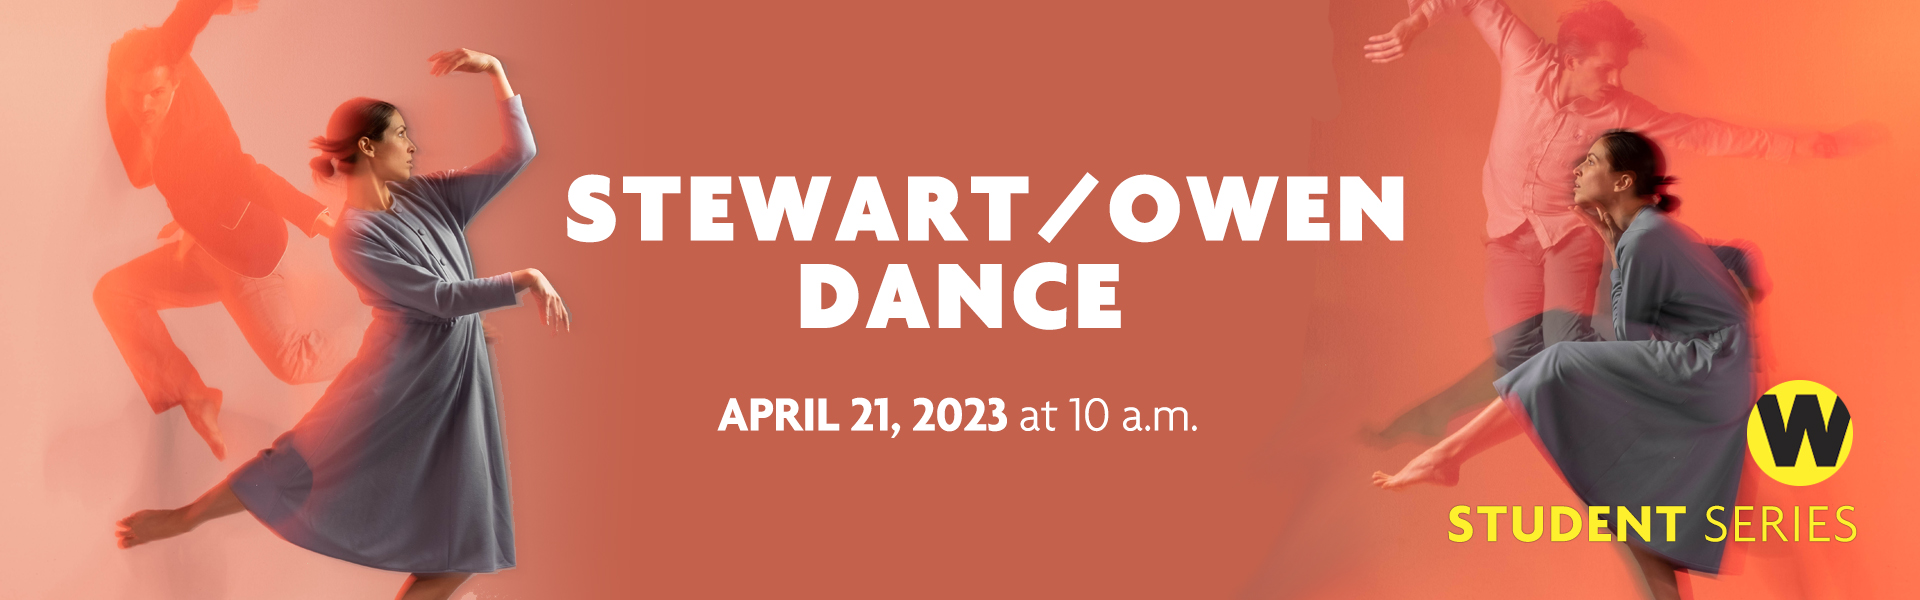 Stewart/Owen Dance - Student Series show, April 21, 2023 at 10 a.m.